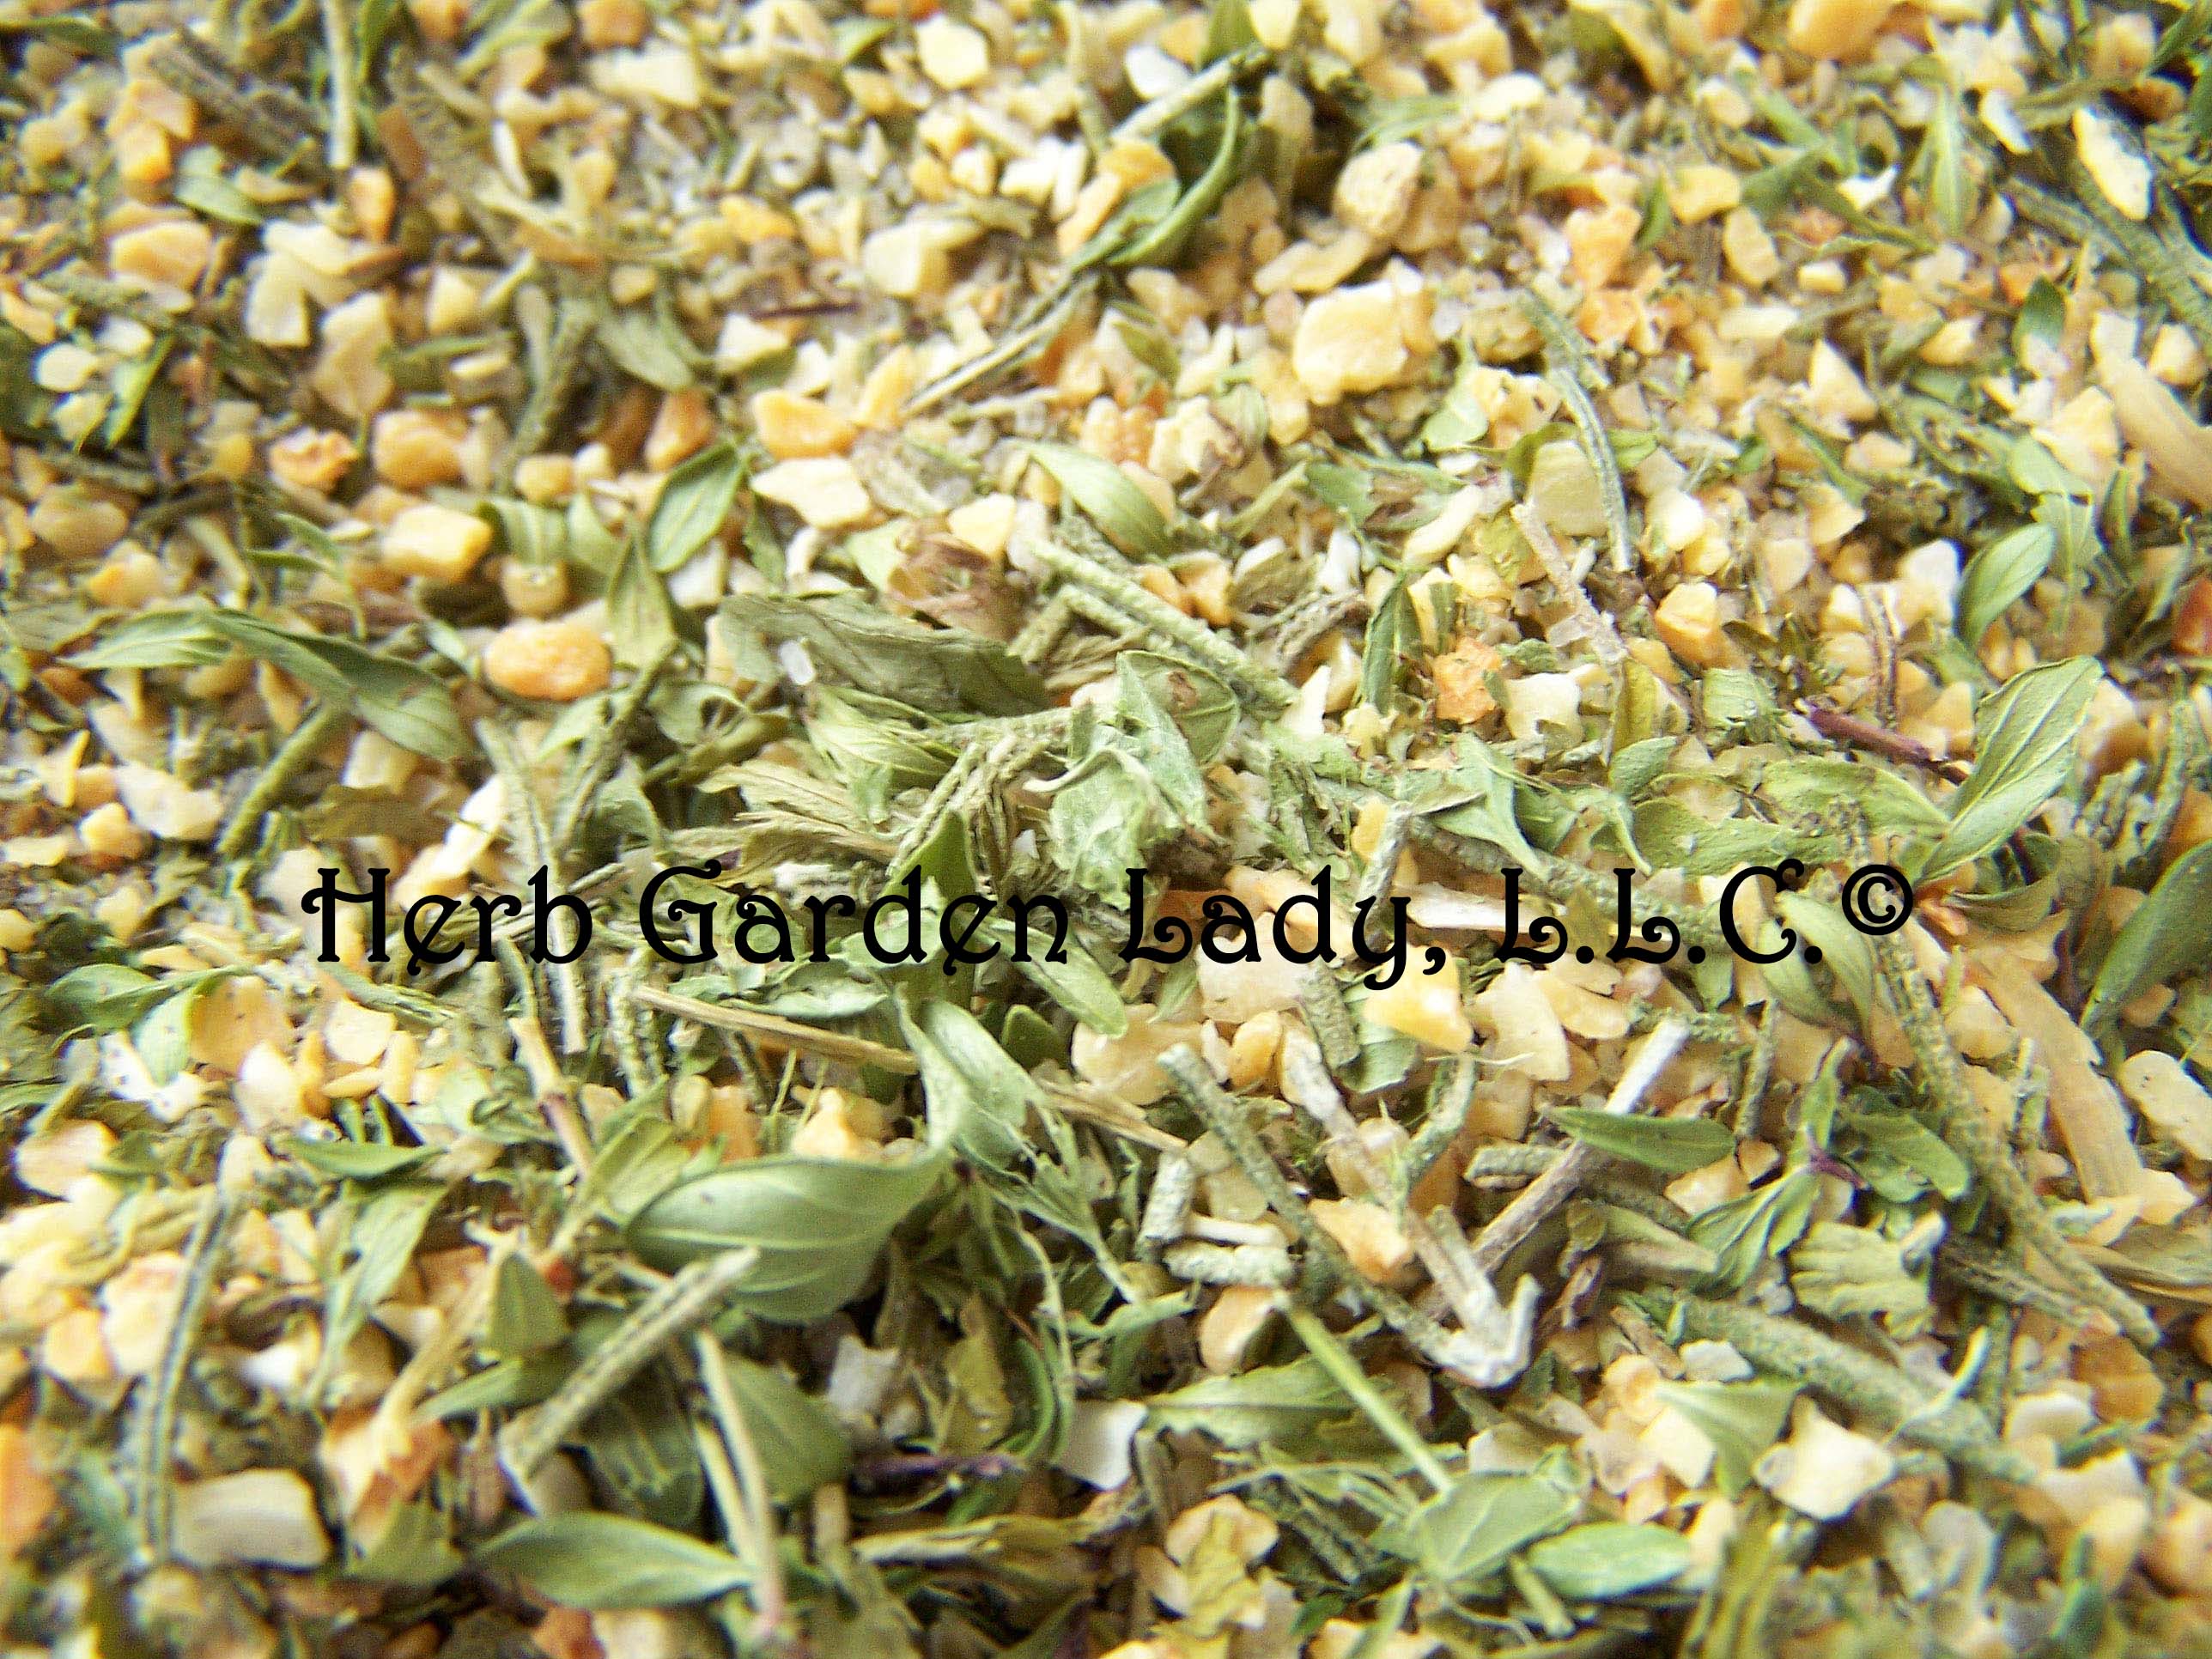 Savory herb rub using garlic, thyme, sea salt, rosemary and freshly ground pepper.